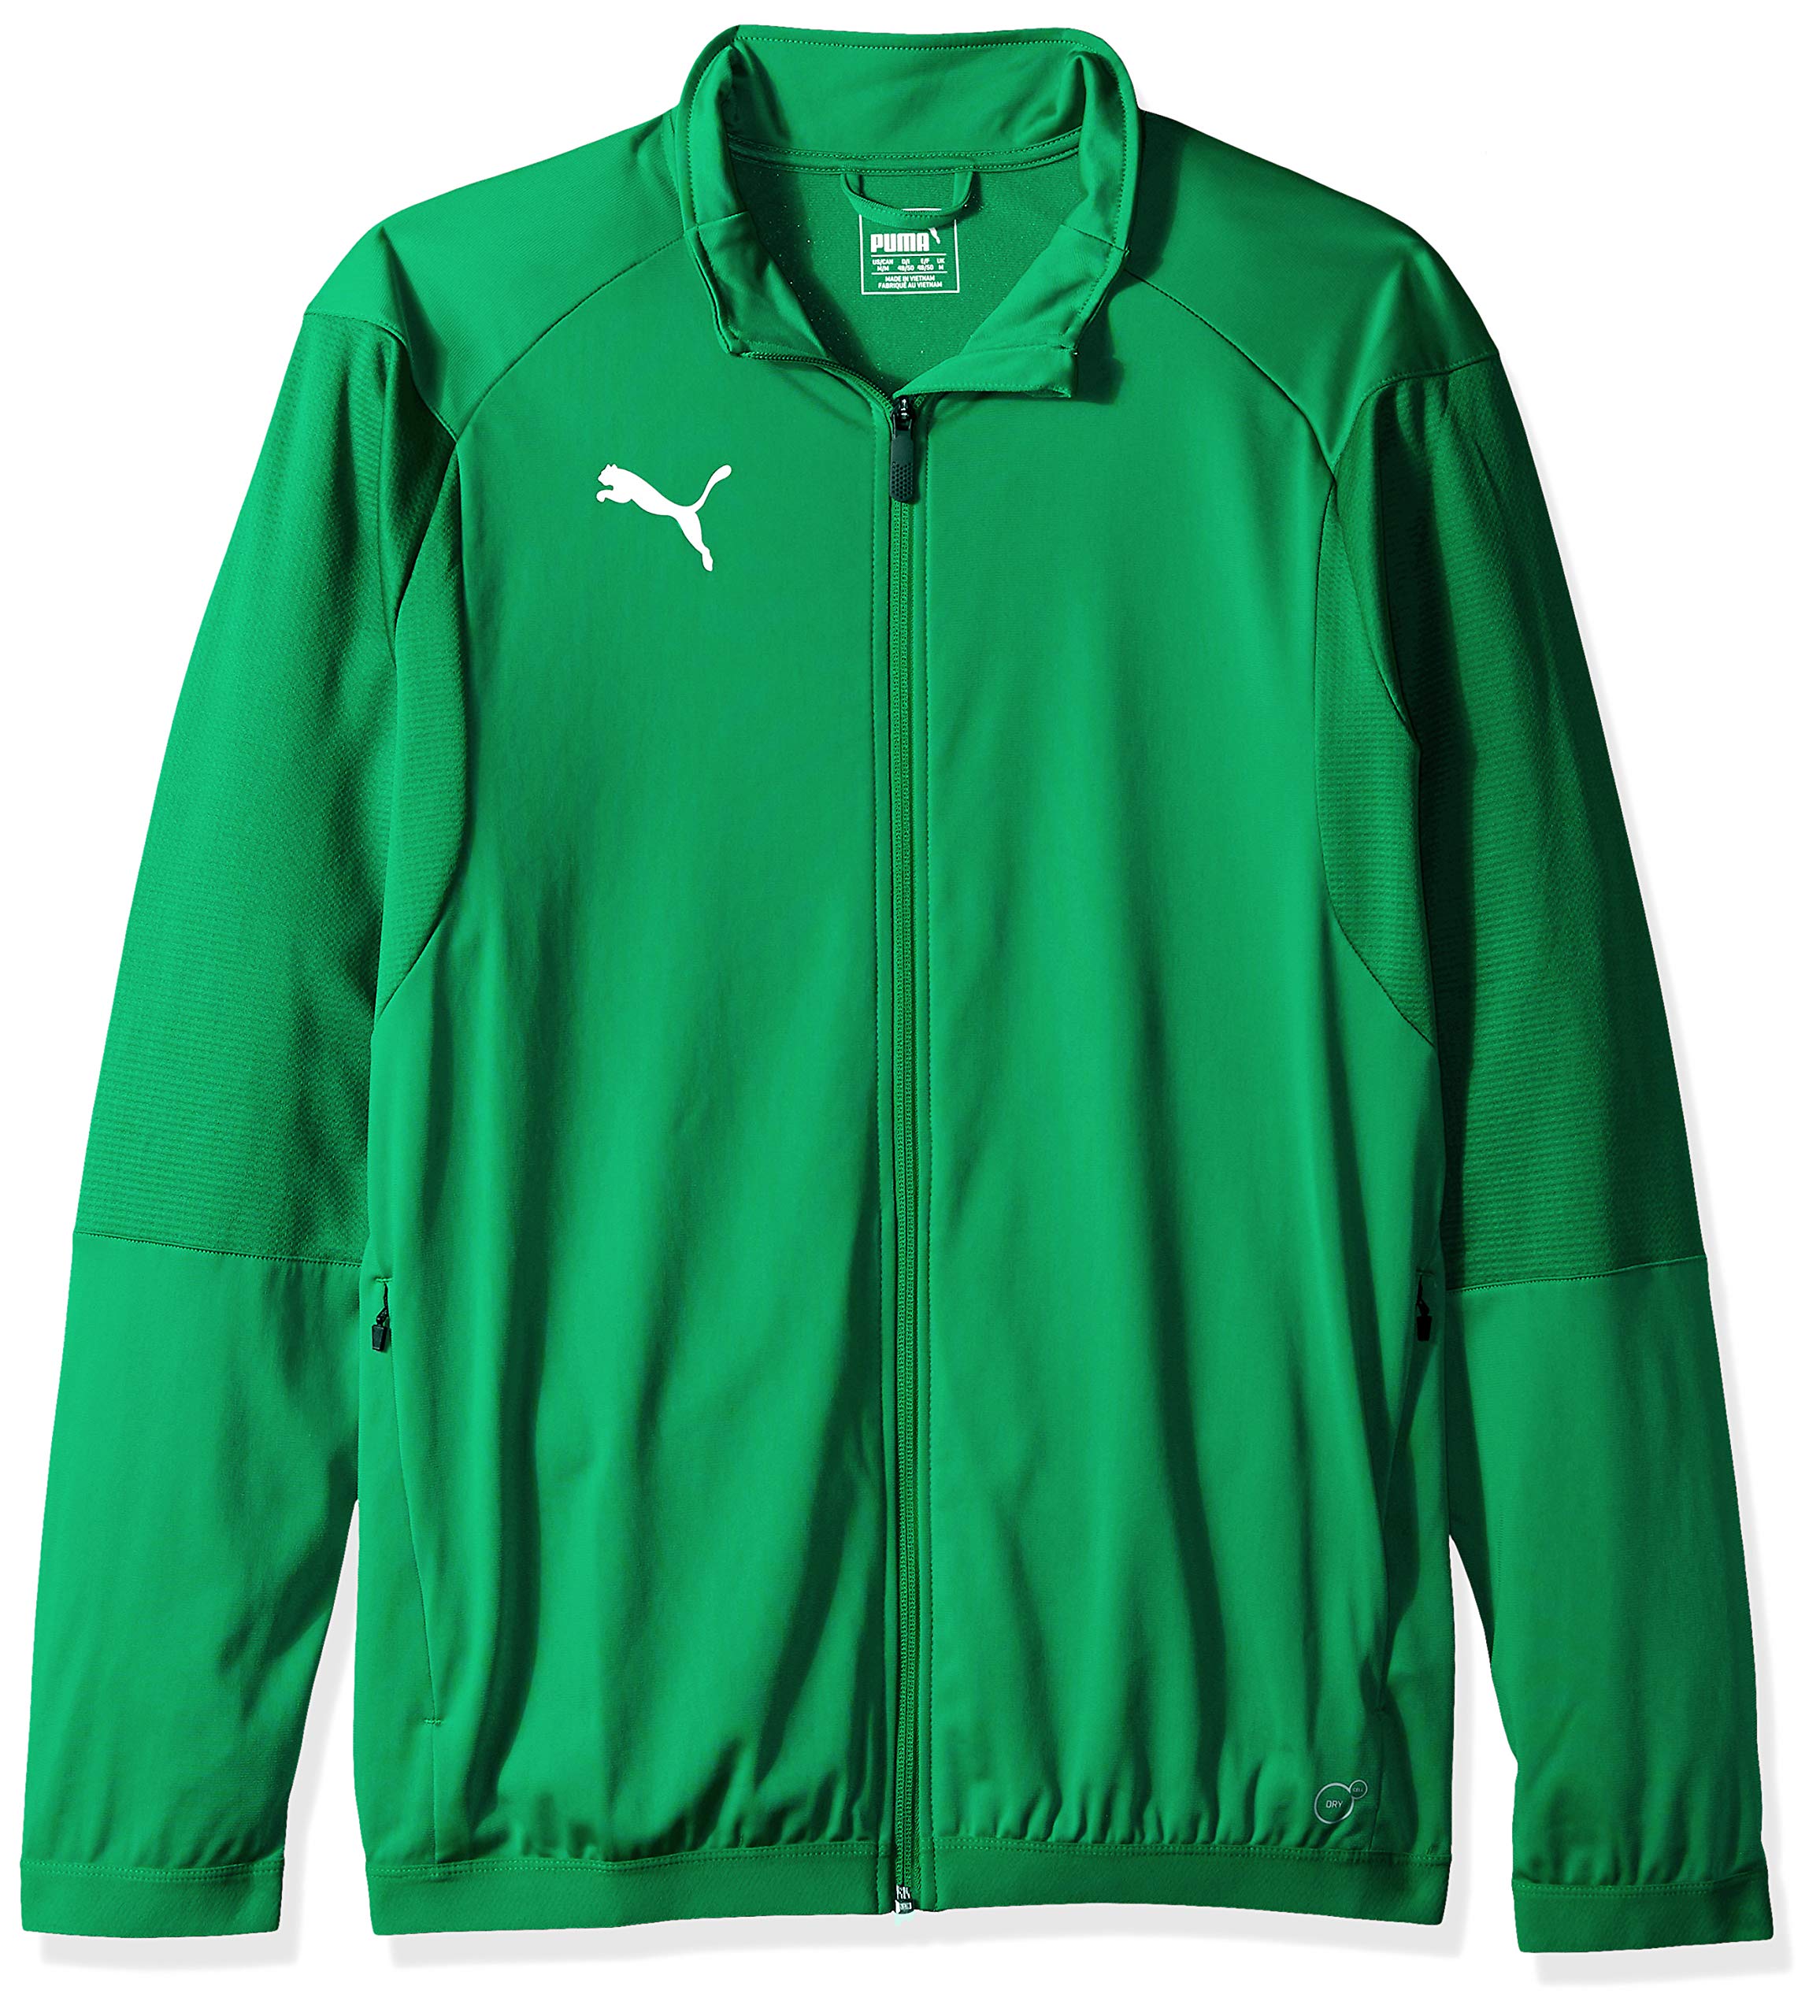 PUMA Mens Liga Training Jacket - Pepper Green/White - Small